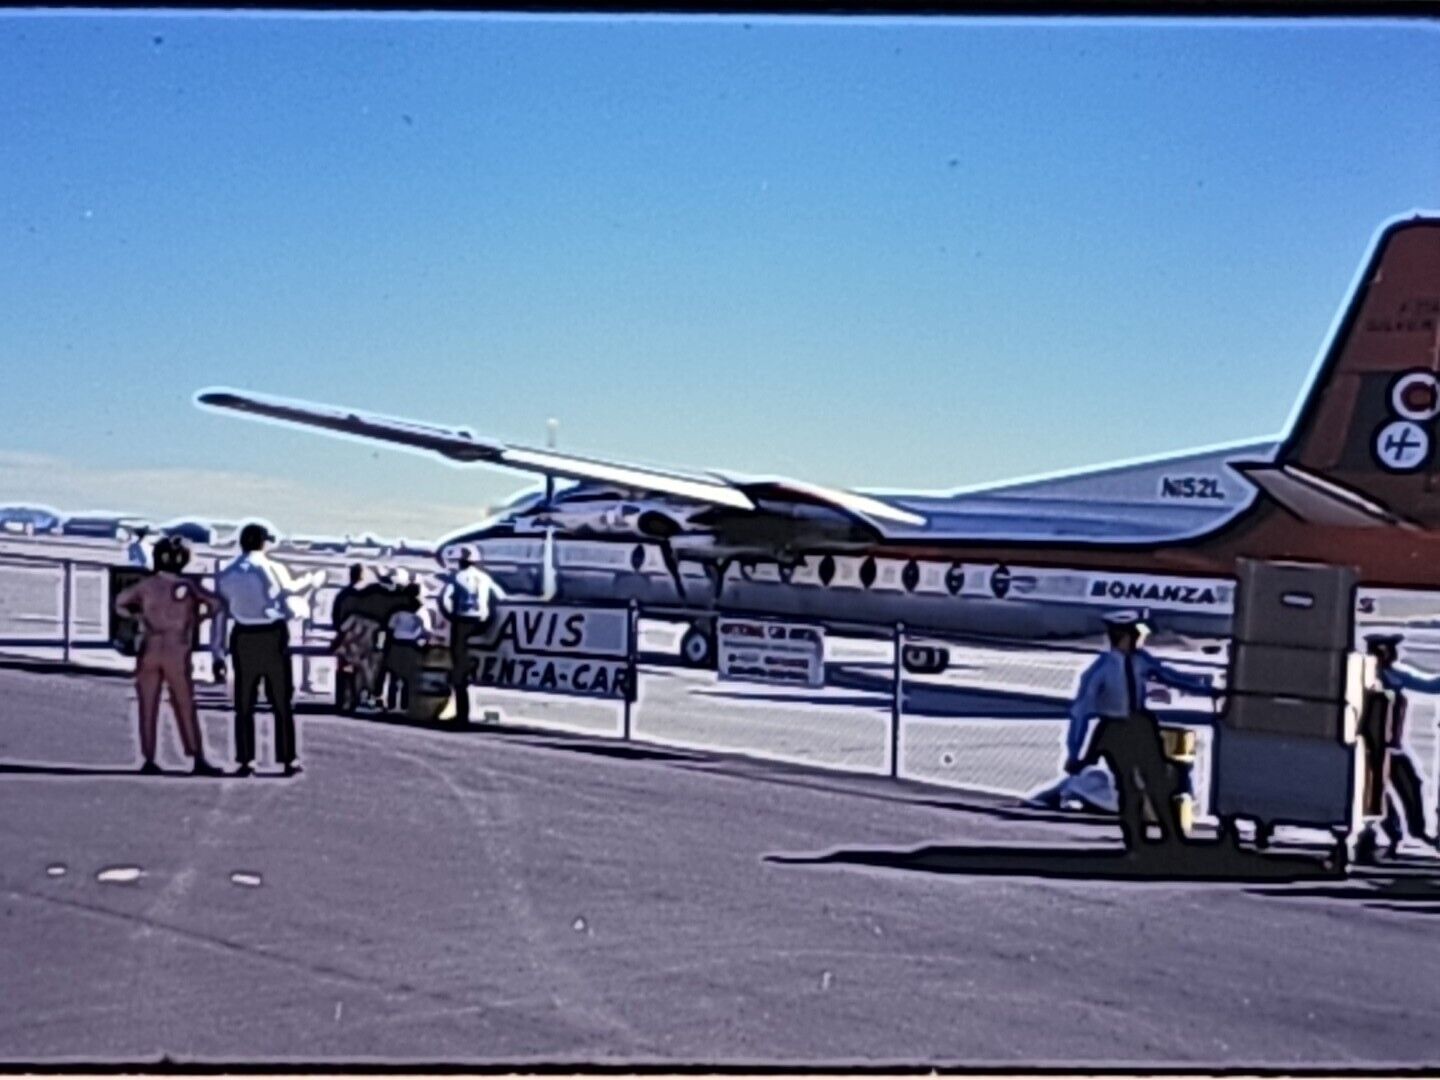 Vintage Bonanza Airlines Plane Photo 35mm Slide